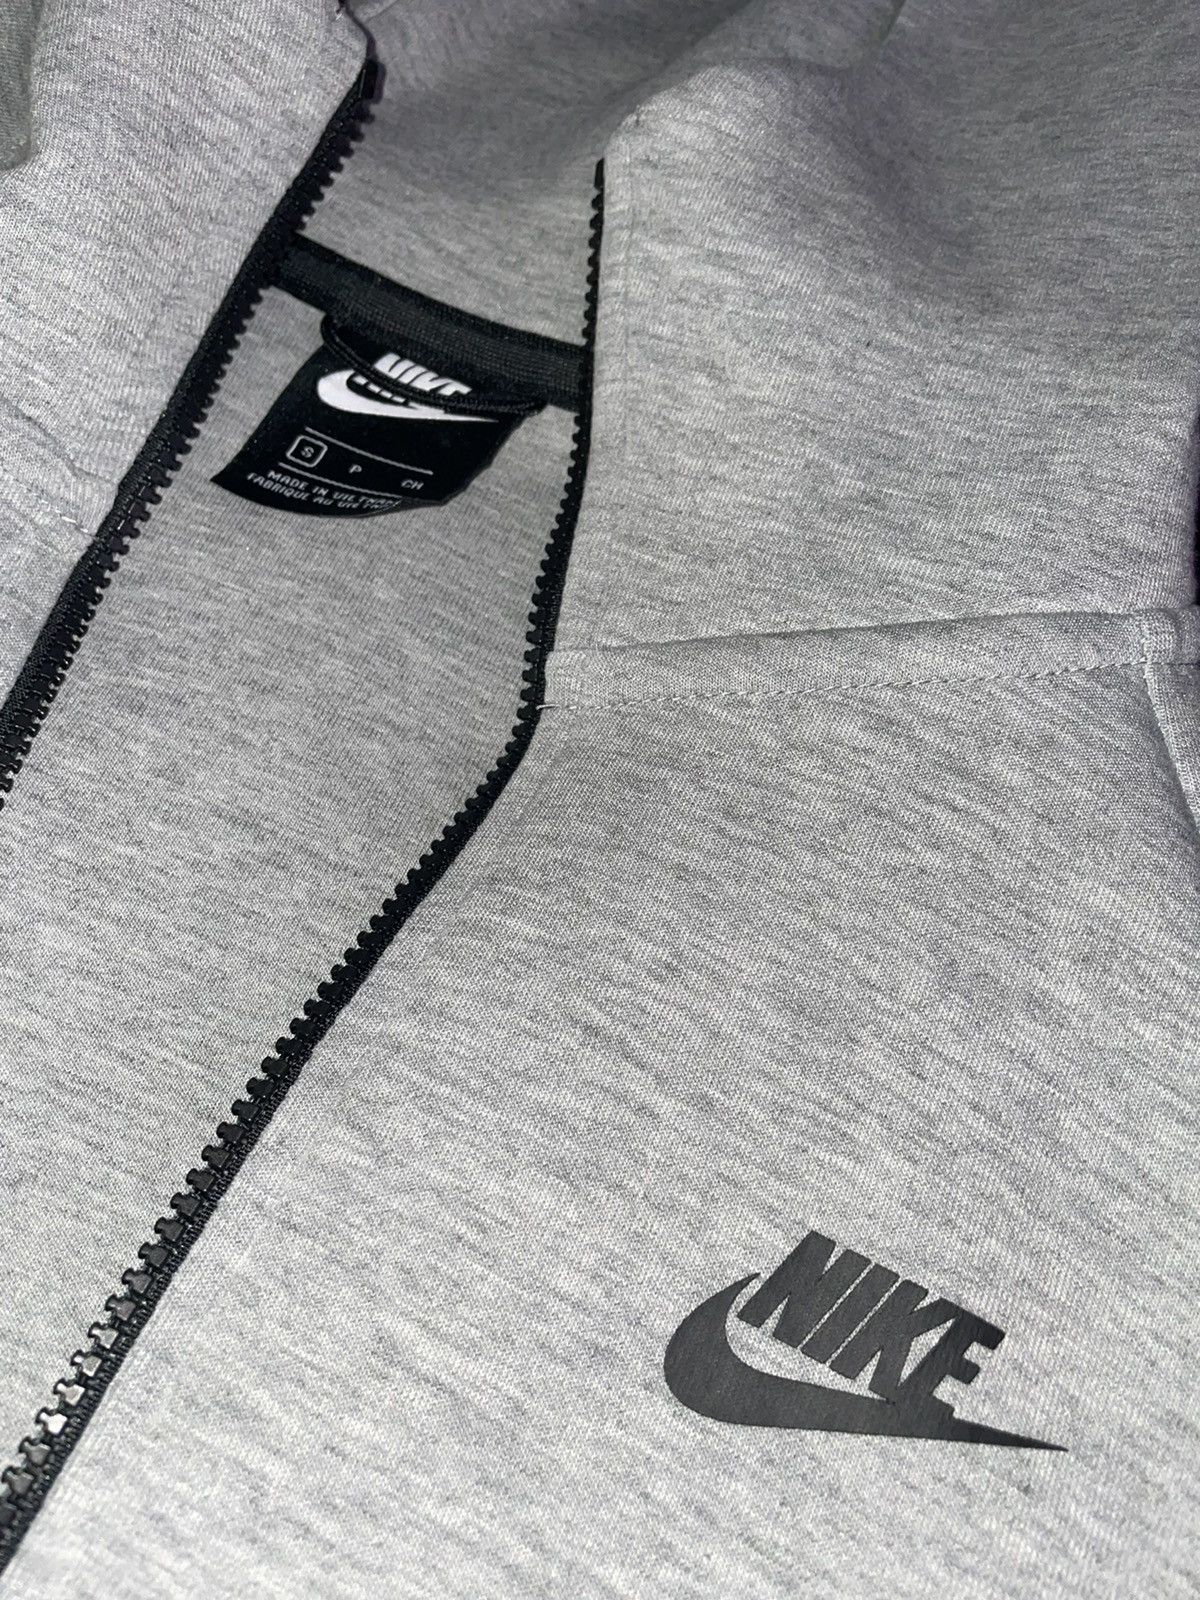 Nike Nike tech hoodie Size US S / EU 44-46 / 1 - 3 Thumbnail